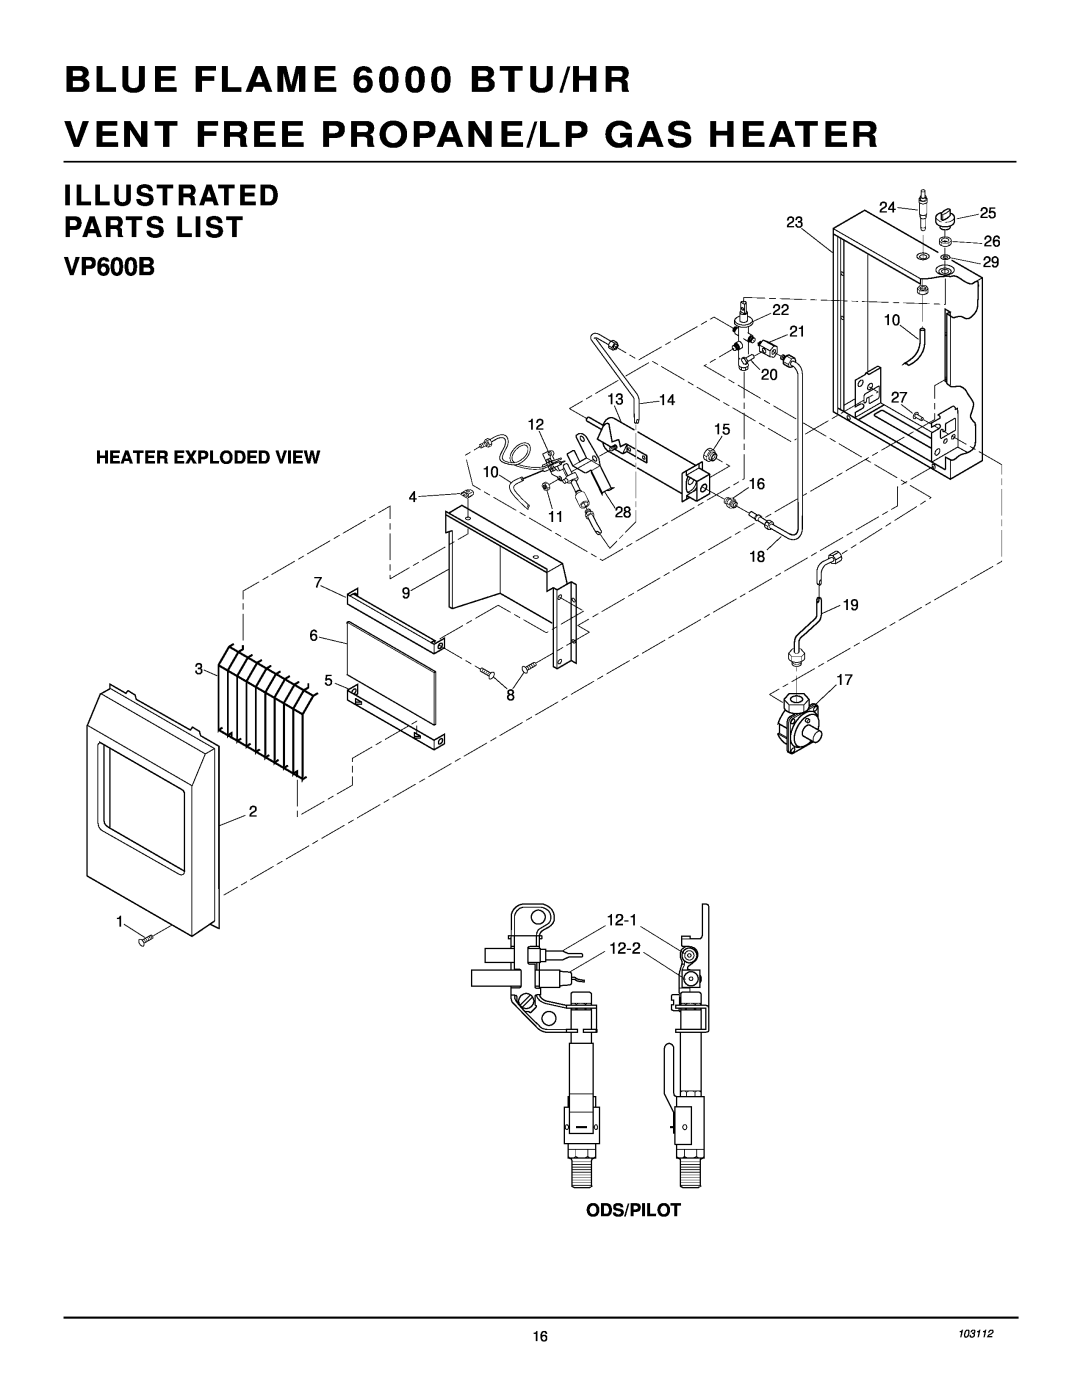 Desa installation manual Illustrated Parts List, BLUE FLAME 6000 BTU/HR VENT FREE PROPANE/LP GAS HEATER, VP600B, 103112 